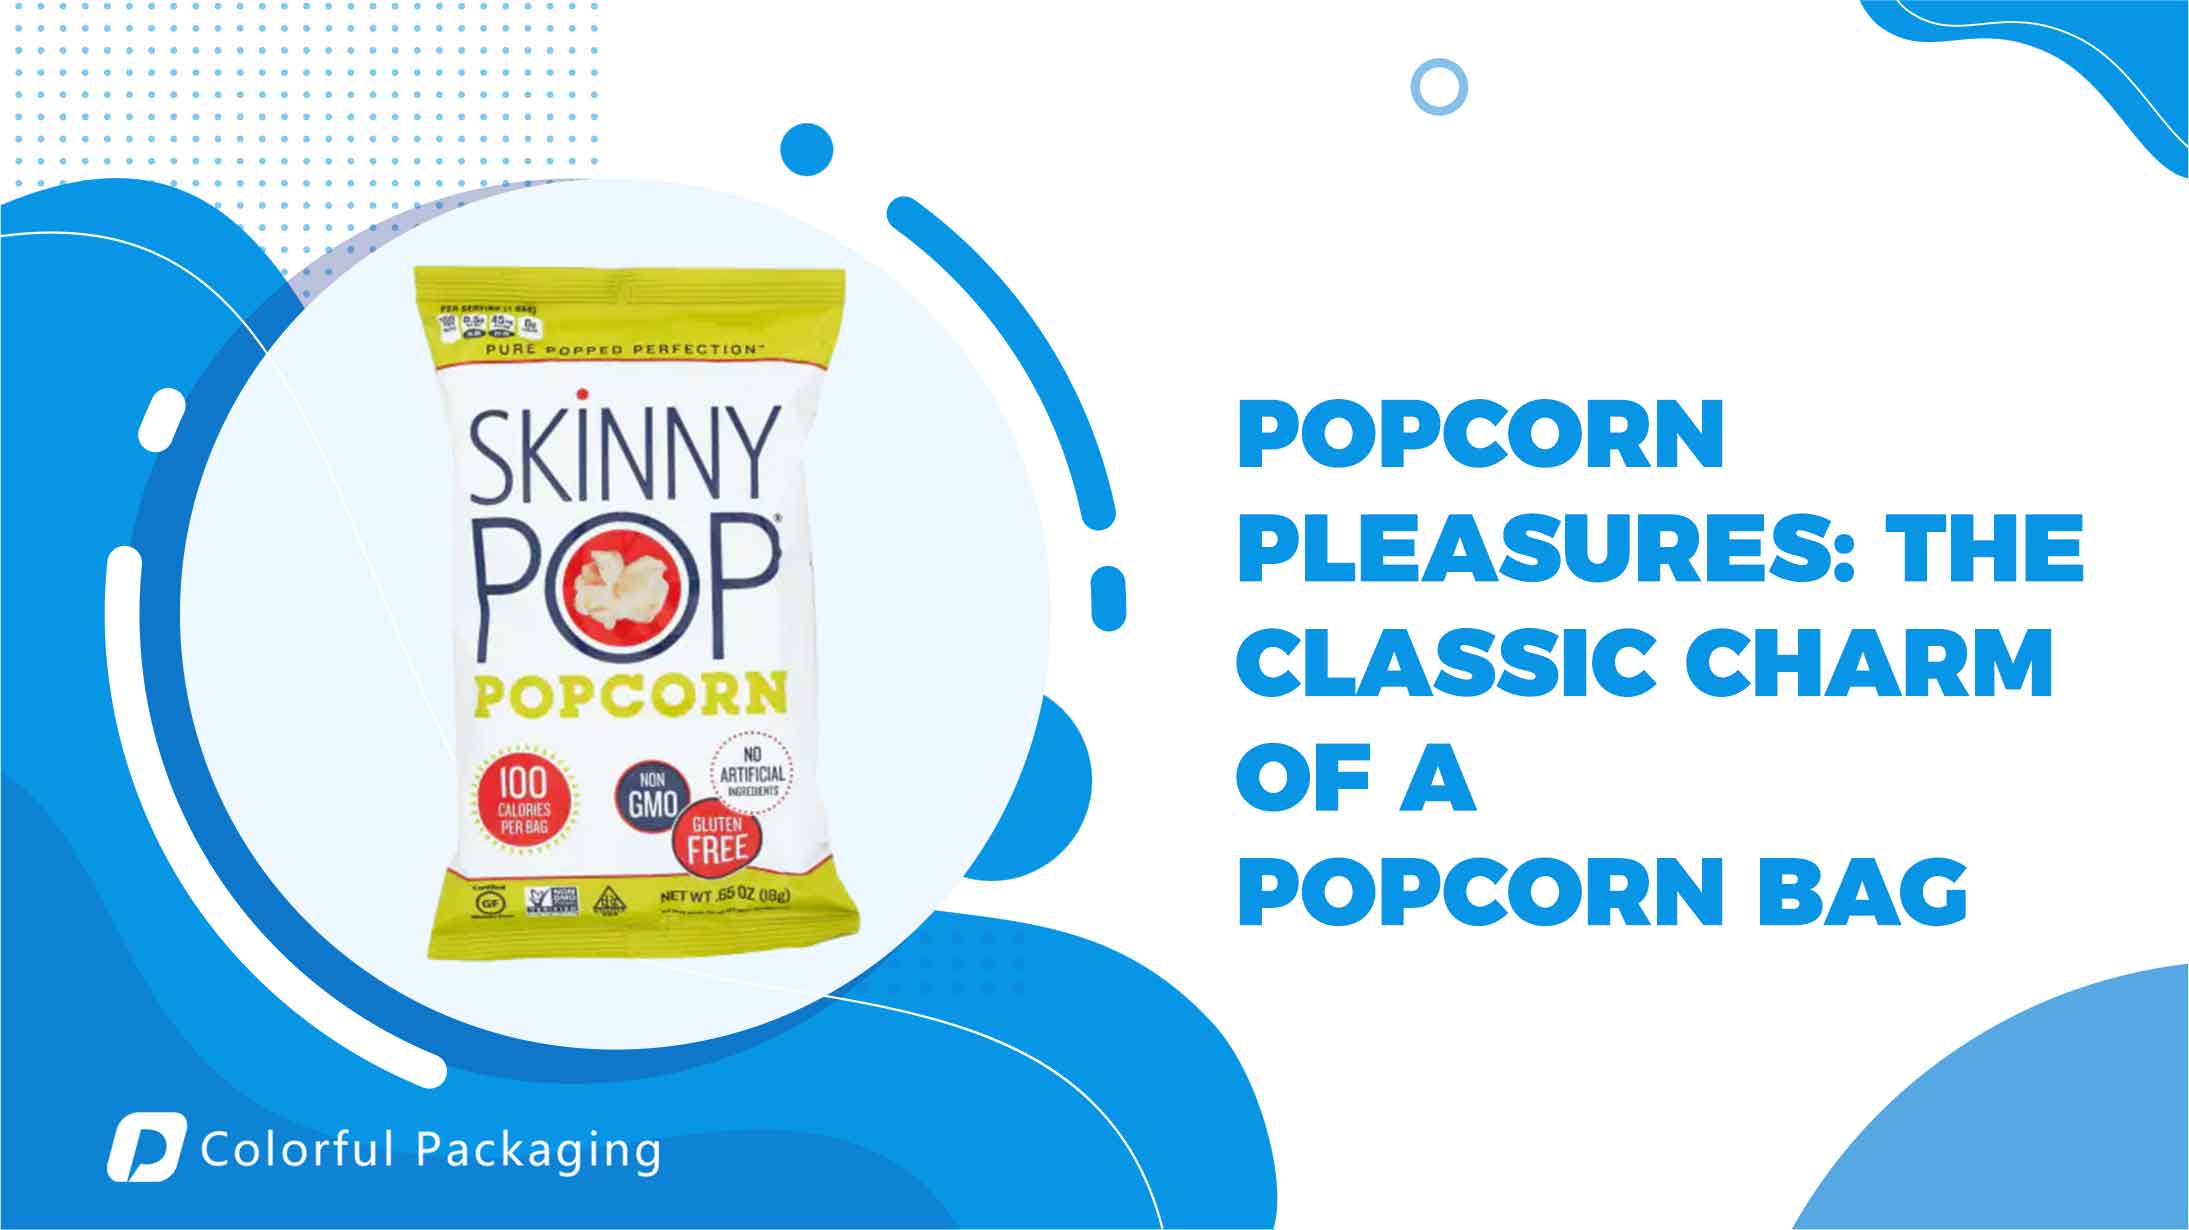 Popcorn Pleasures: The Classic Charm of a Popcorn Bag